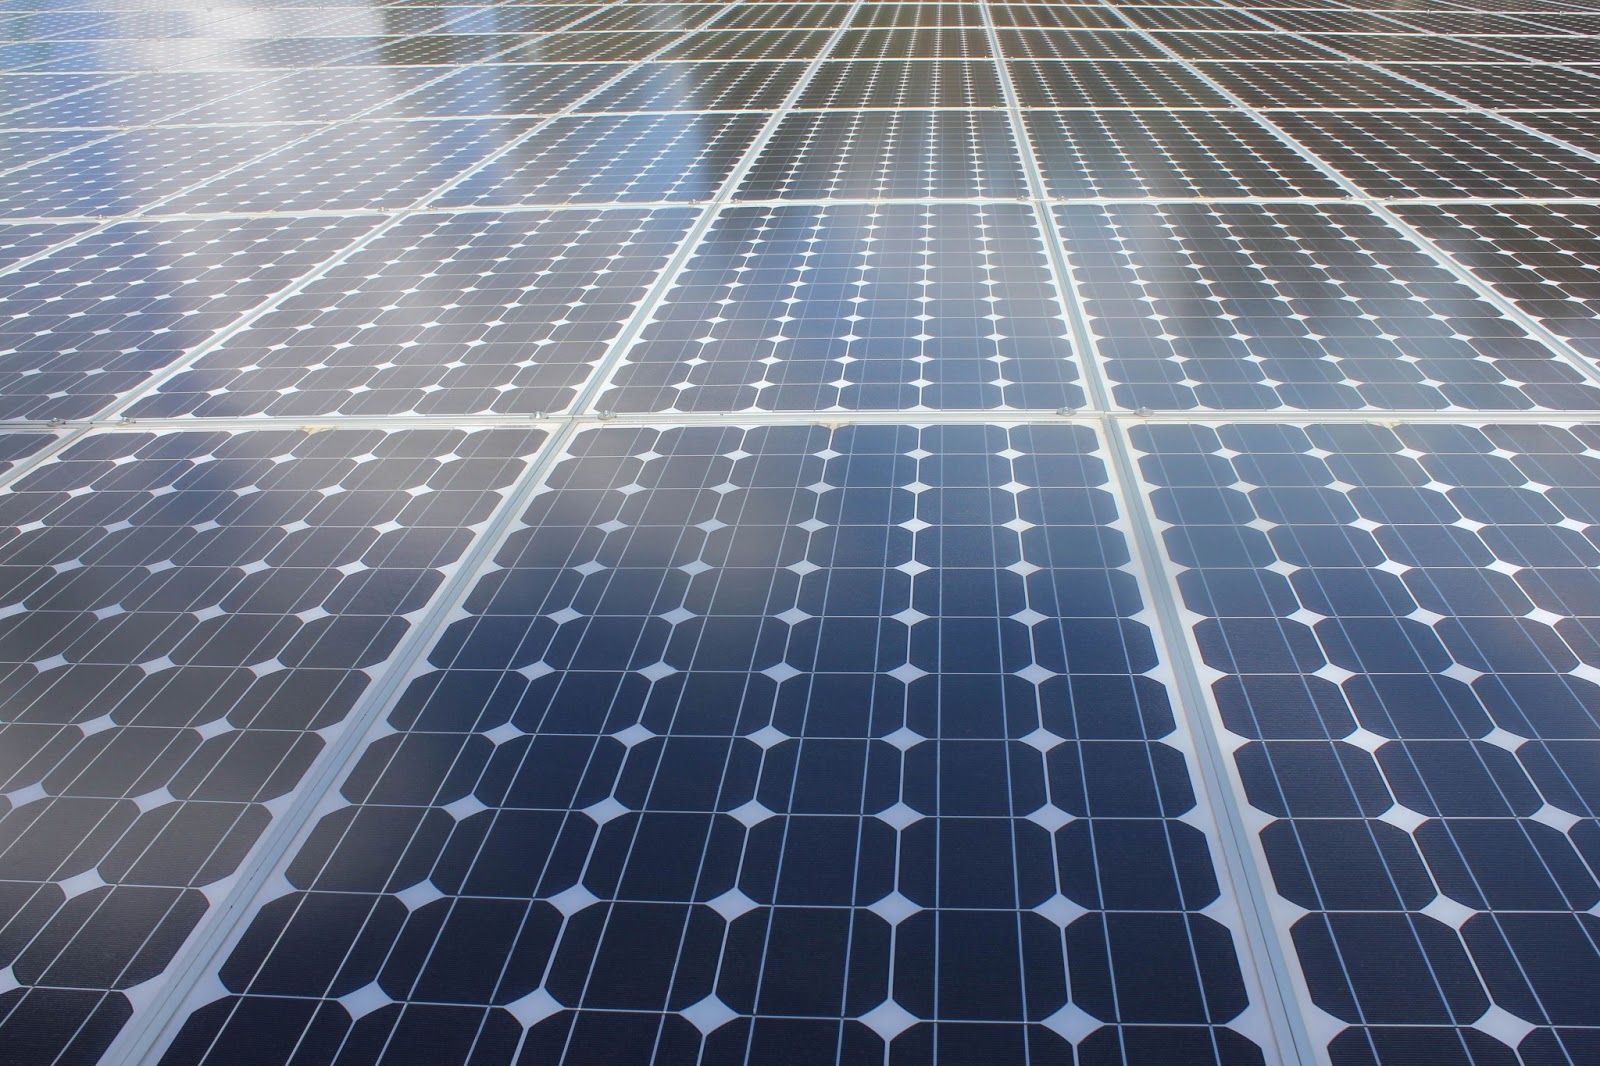 Provo City Council: Council to Consider Solar Panel Ordinance